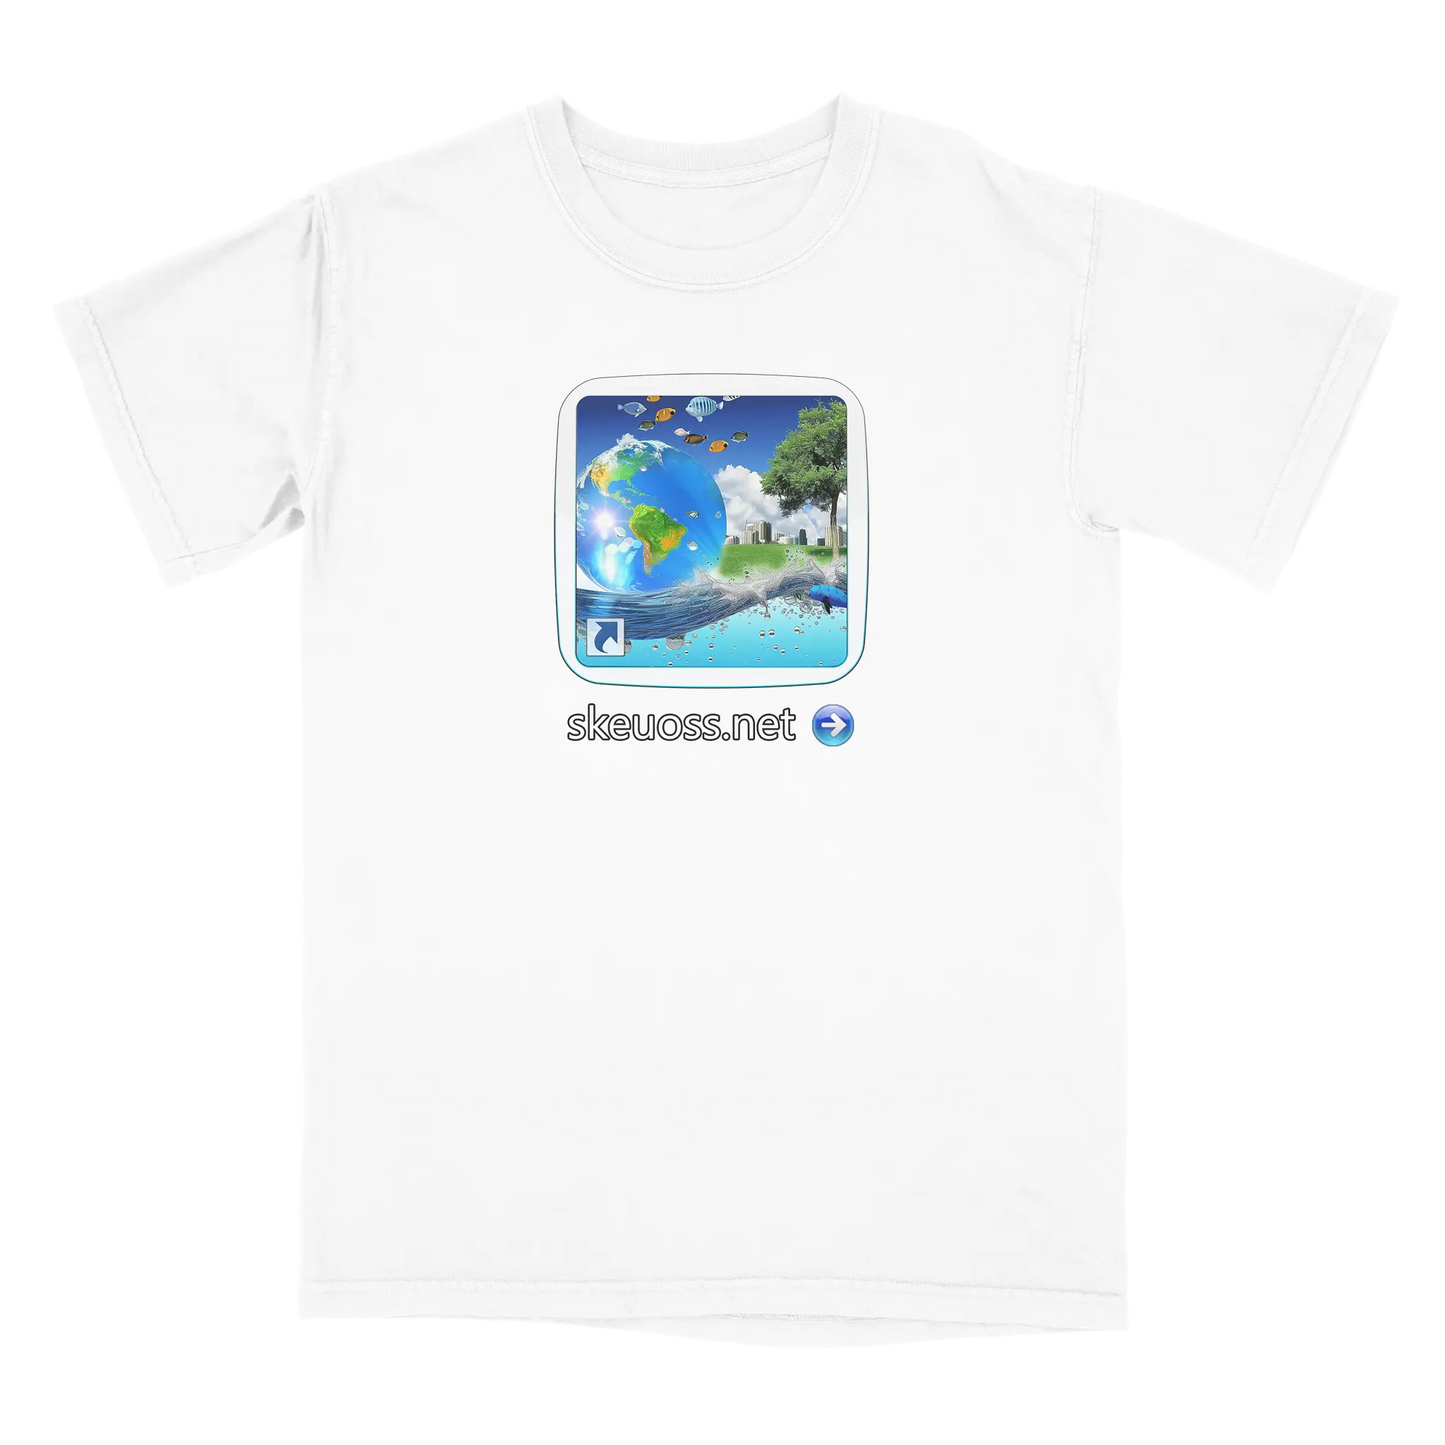 Frutiger Aero T-shirt - User Login Collection - User 377